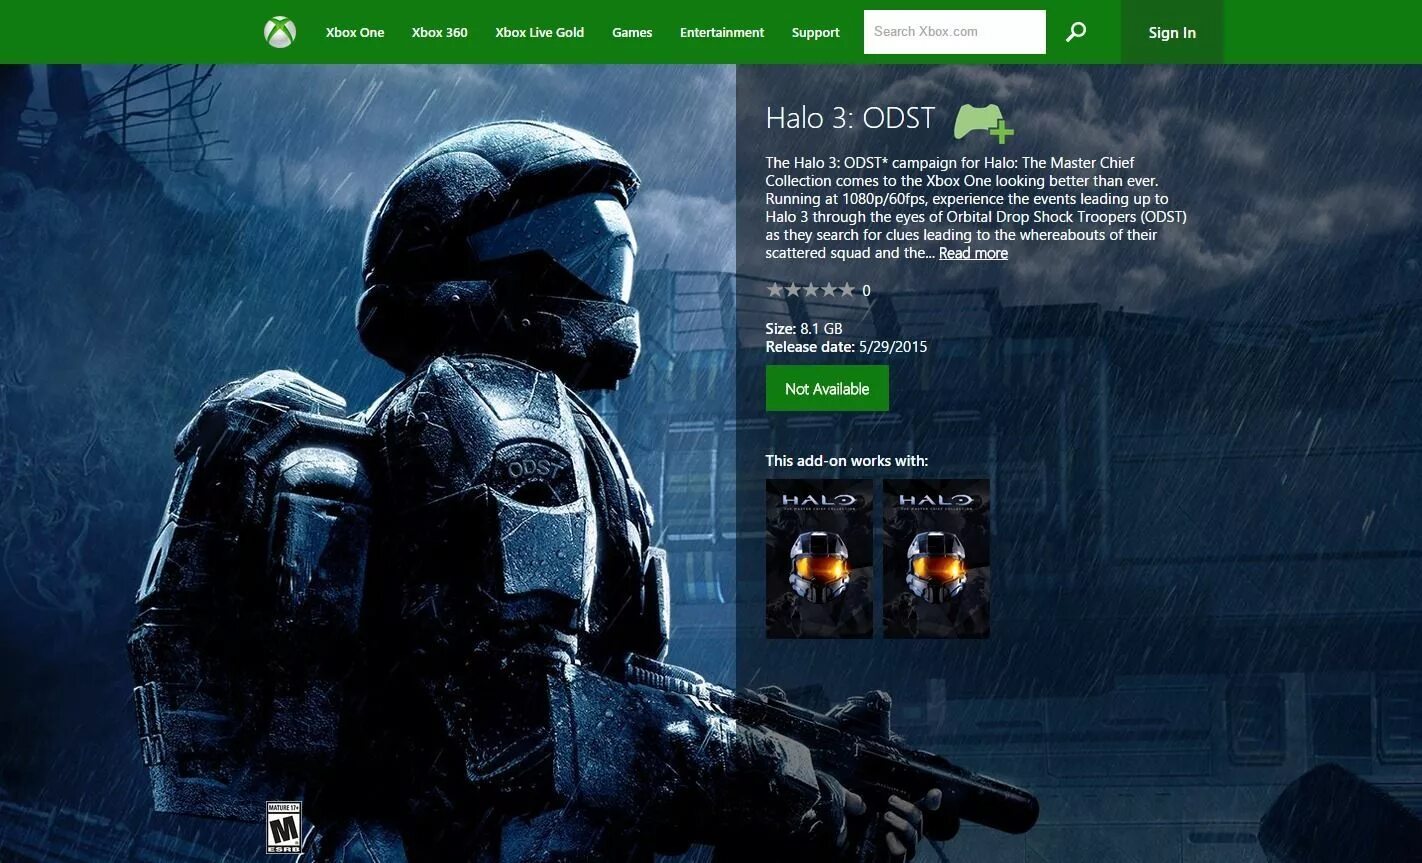 Обложка для Halo 3 ODST на Xbox 360. Xbox 360 Halo 2 ODST. Halo the Master Chief collection полный размер. Halo 3 ODST Интерфейс.